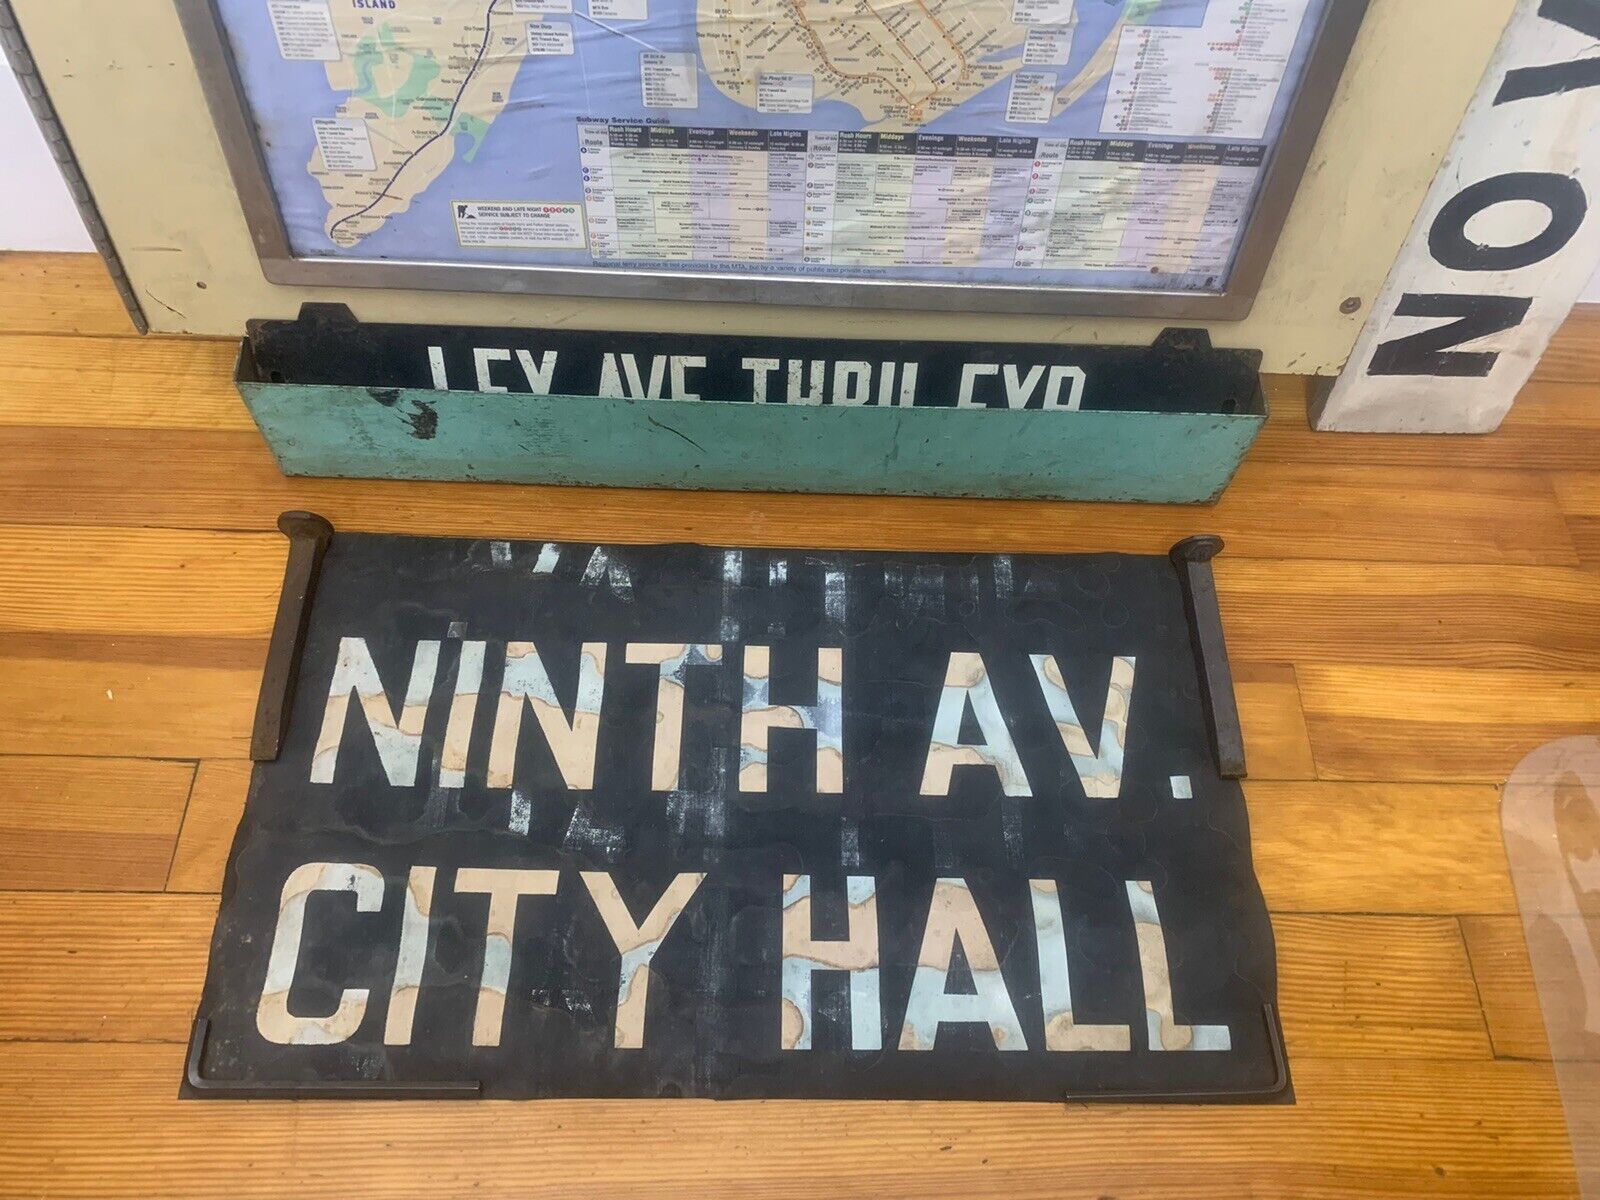 NYC SUBWAY ROLL SIGN WORN NINTH AVENUE HARLEM POLO GROUNDS SHUTTLE CITY HALL ART